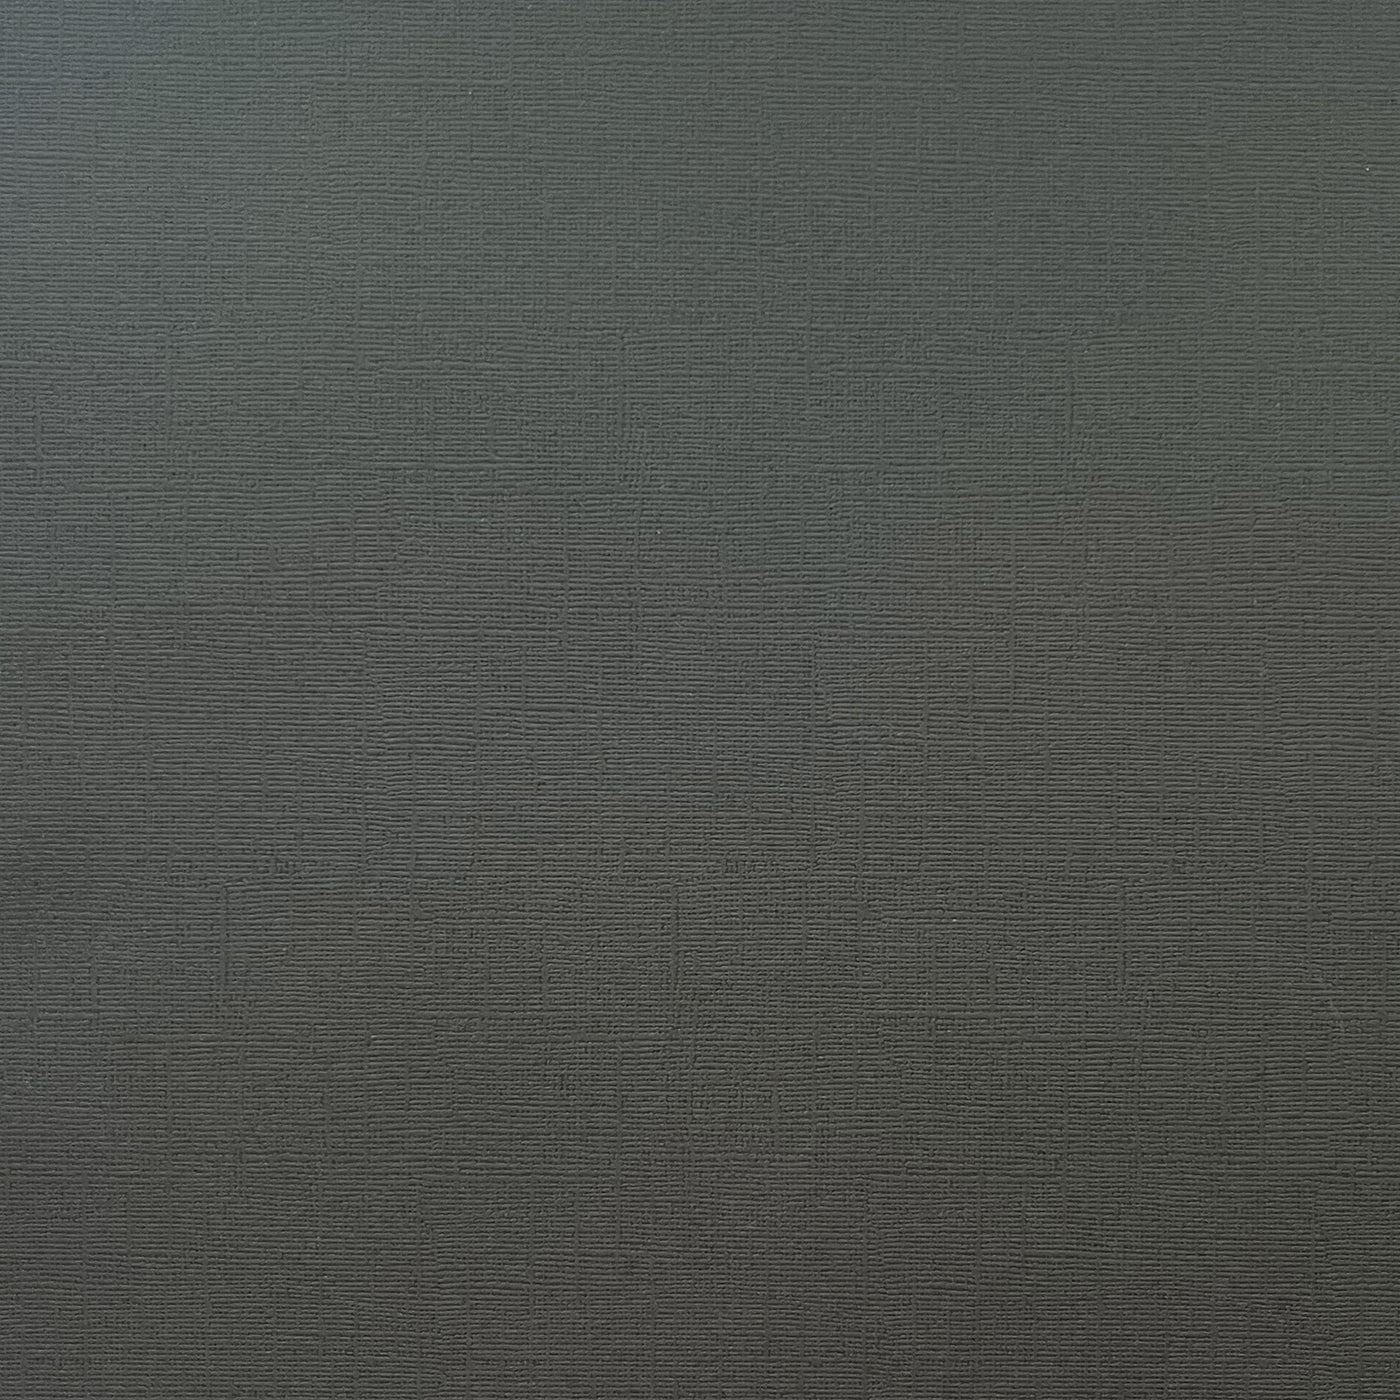 SHARK SKIN - dark gray textured cardstock